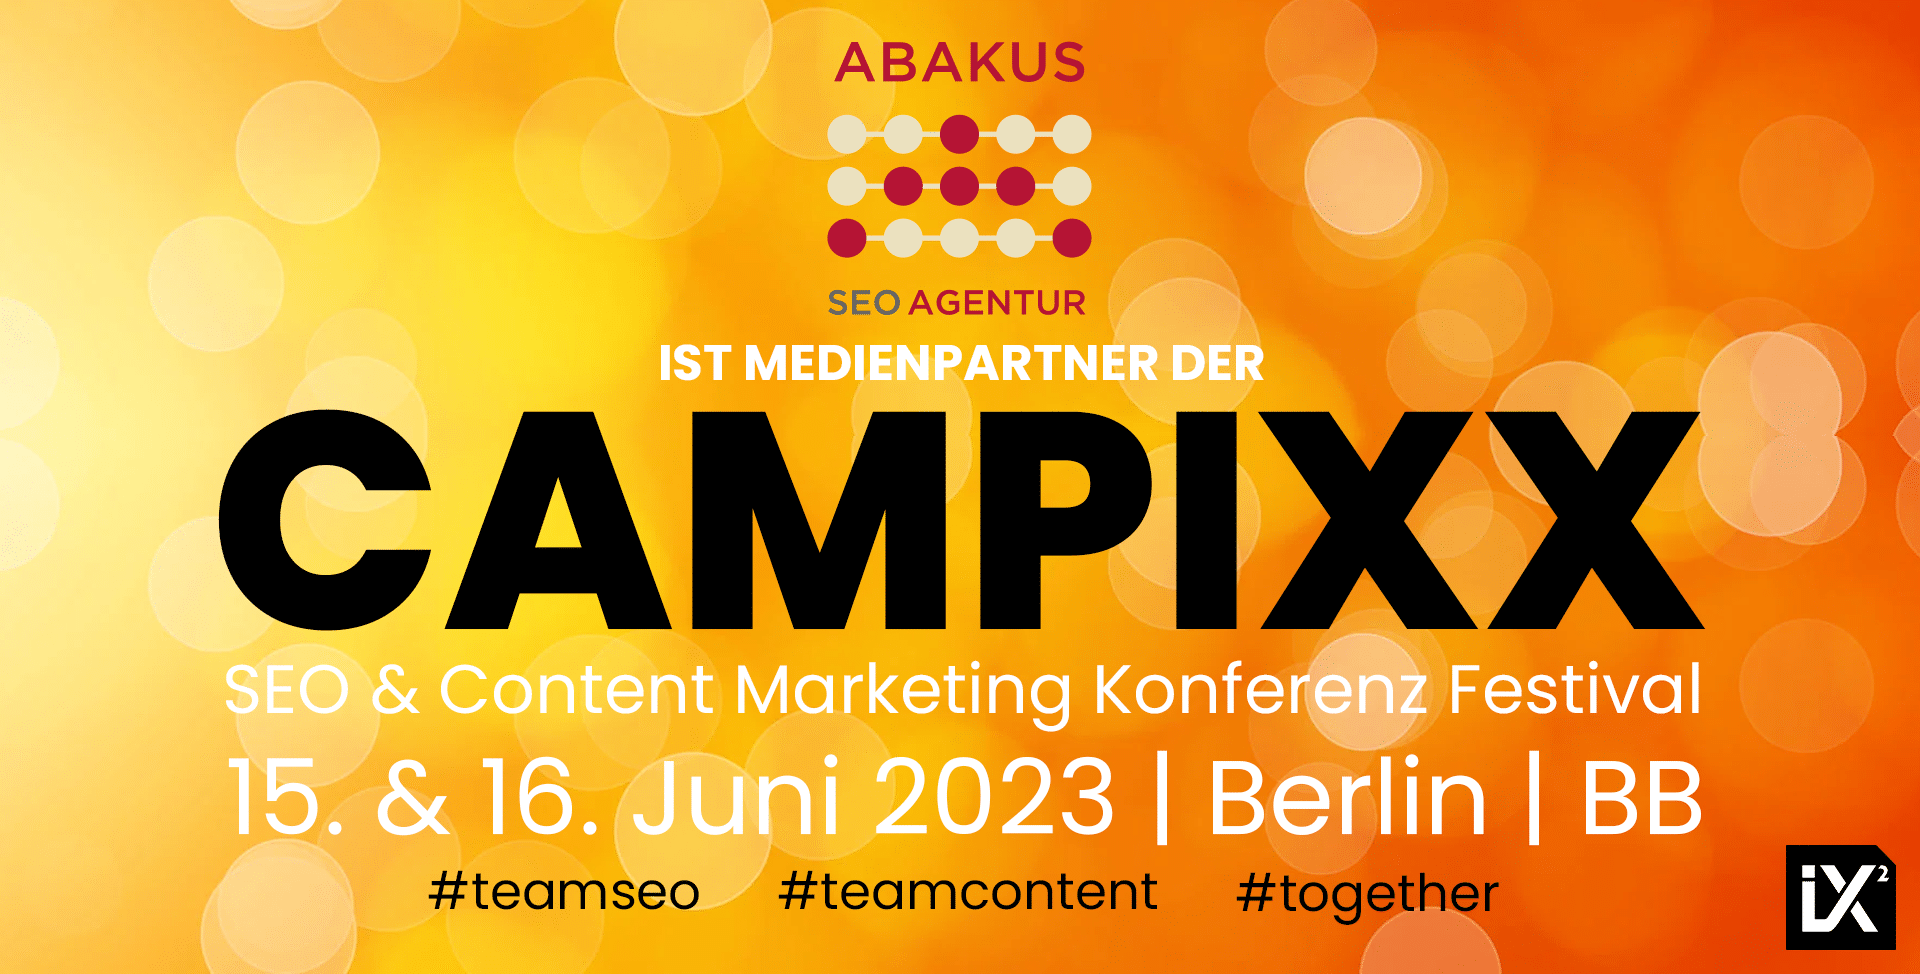 CAMPIXX 2023 mit ABAKUS Internet Marketing